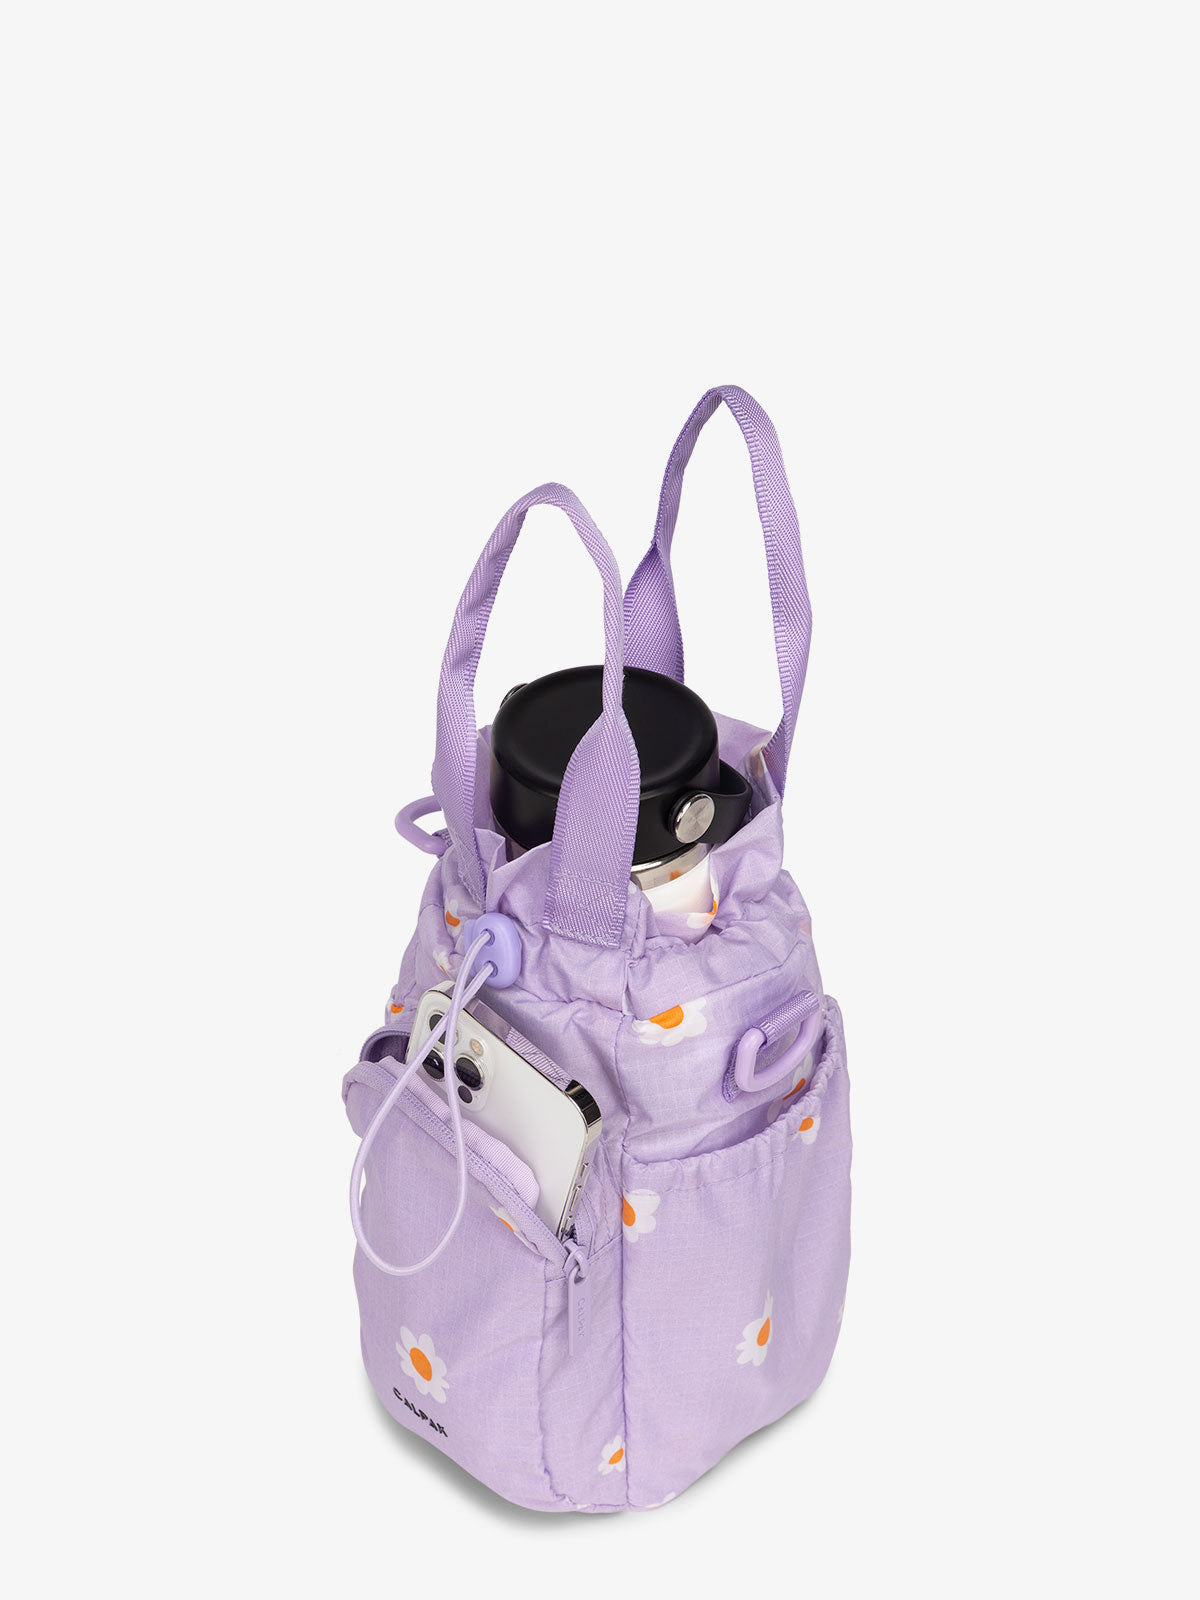 CALPAK Water Bottle carrier with zippered pocket in orchid fields purple